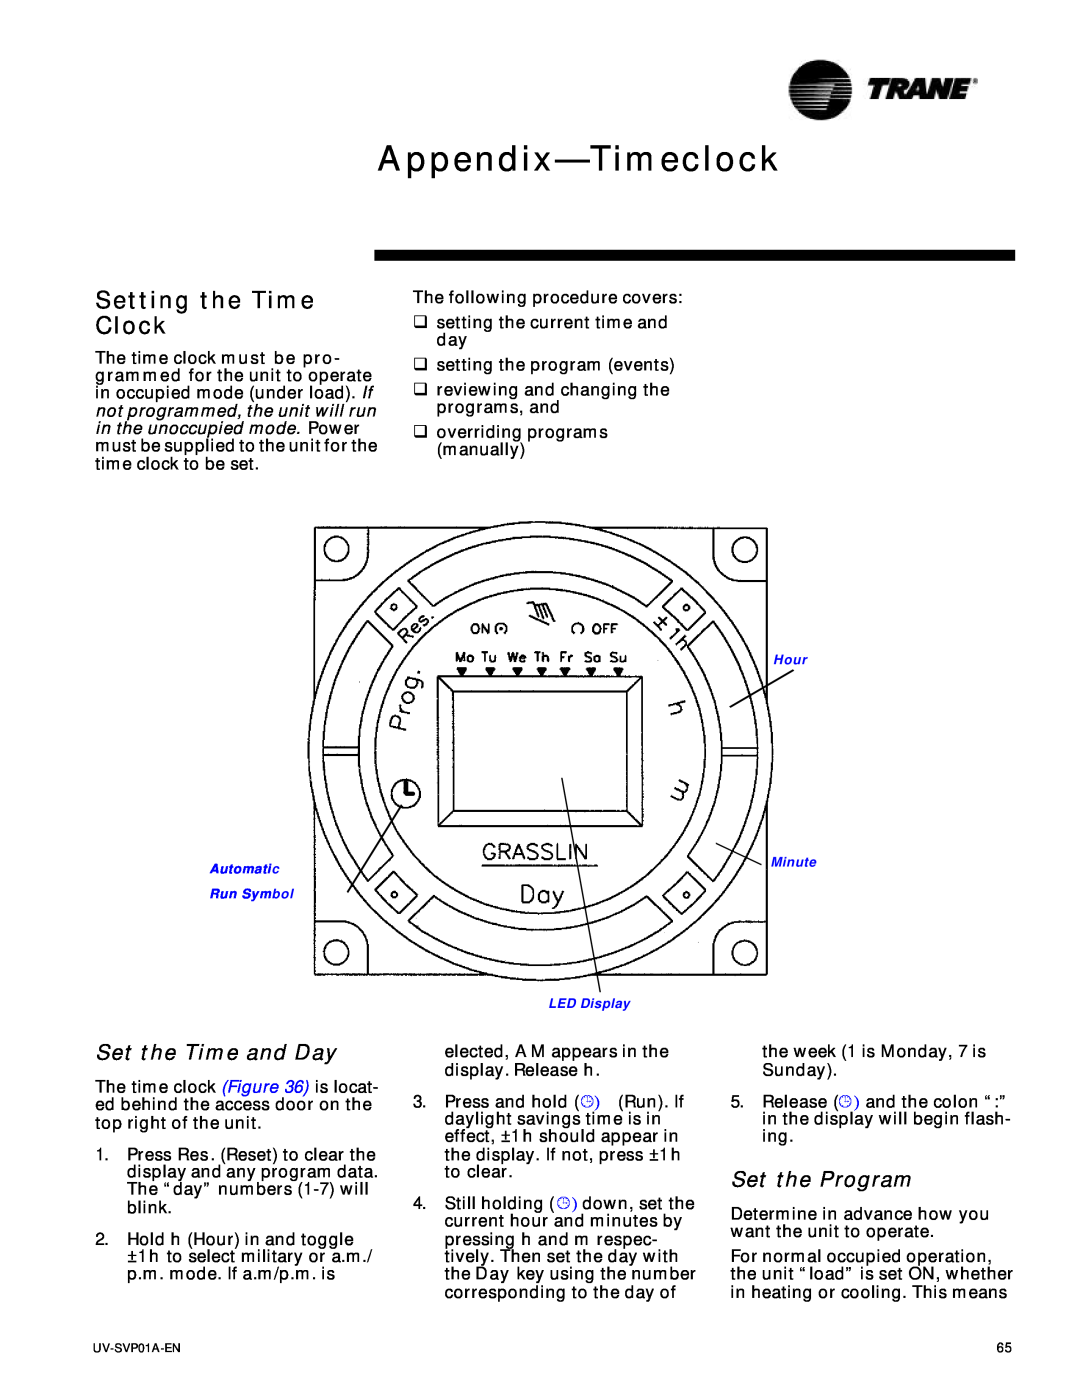 Trane Tracer Unit Ventilator, ZN.520 manual Appendix-Timeclock, Setting the Time Clock 